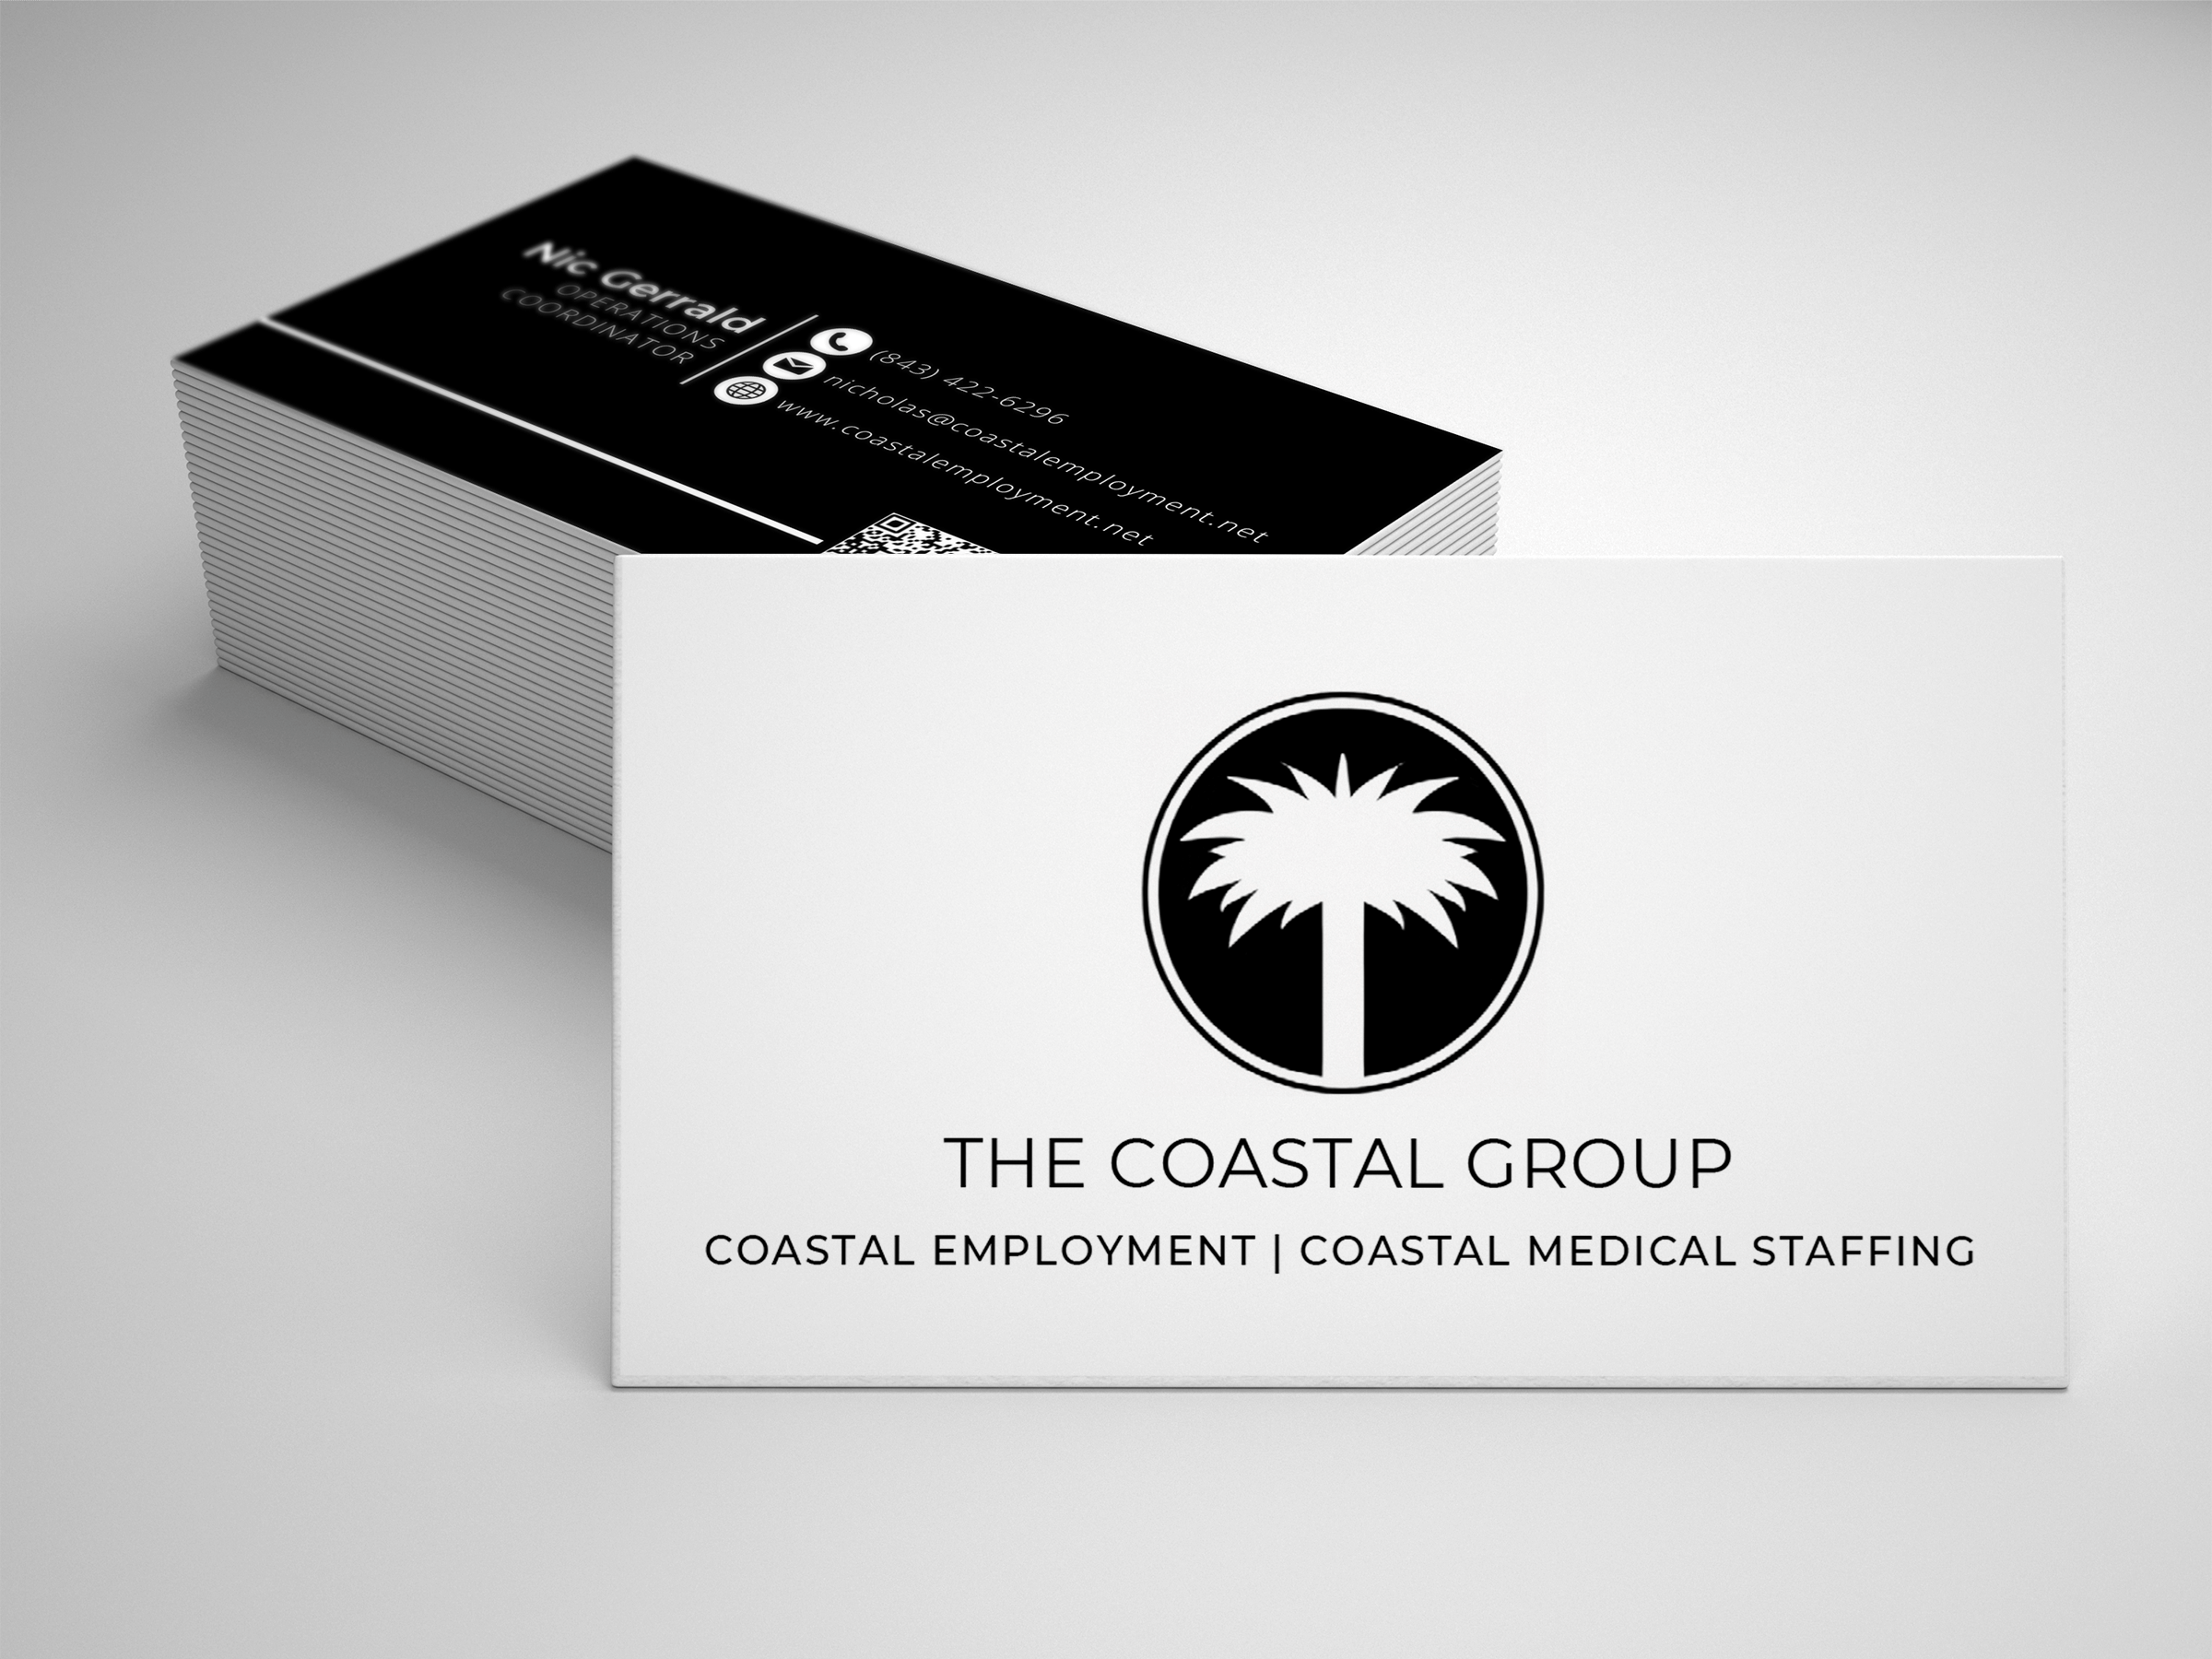 Nic Gerrald The Coastal Group Business Card Mockup.png